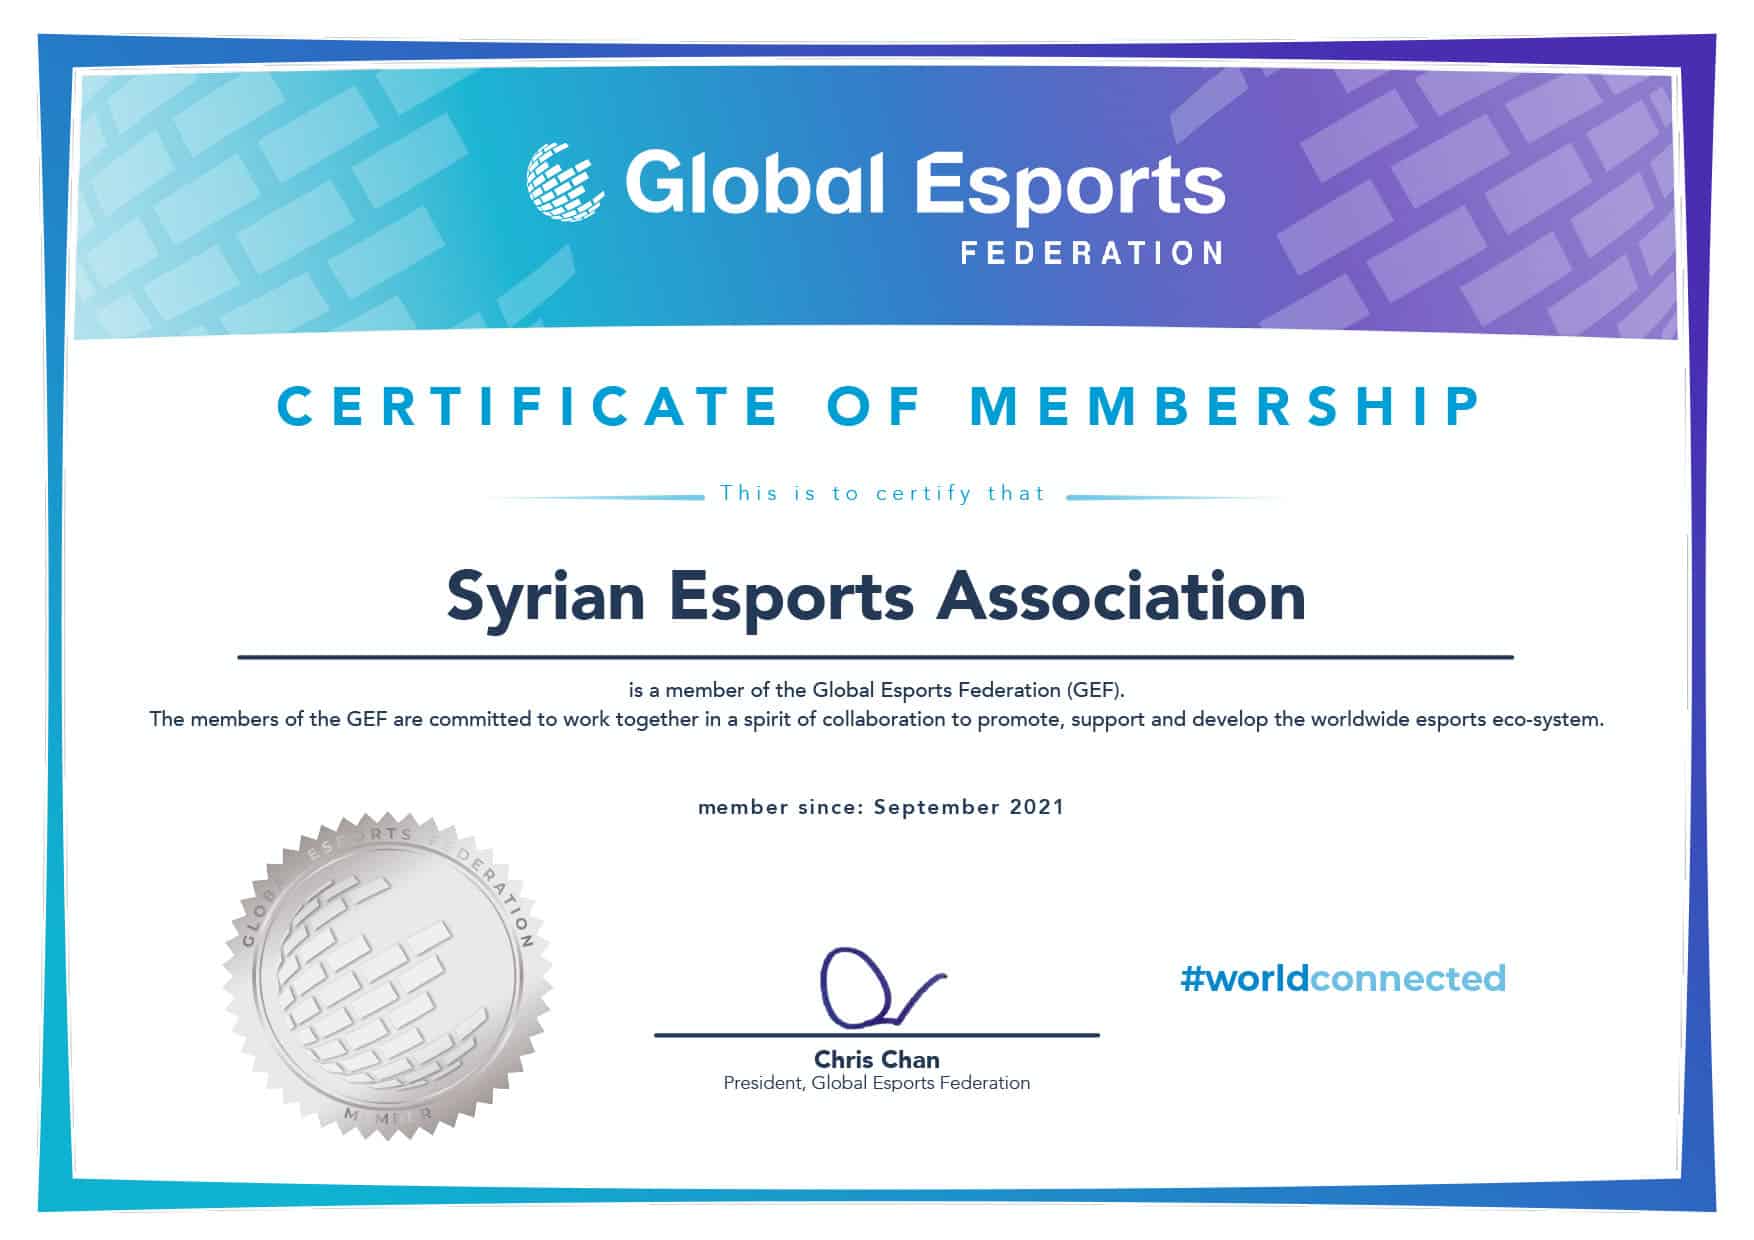 sesa syria full member gef certificate اعتراف global esports federation سوريا sesa